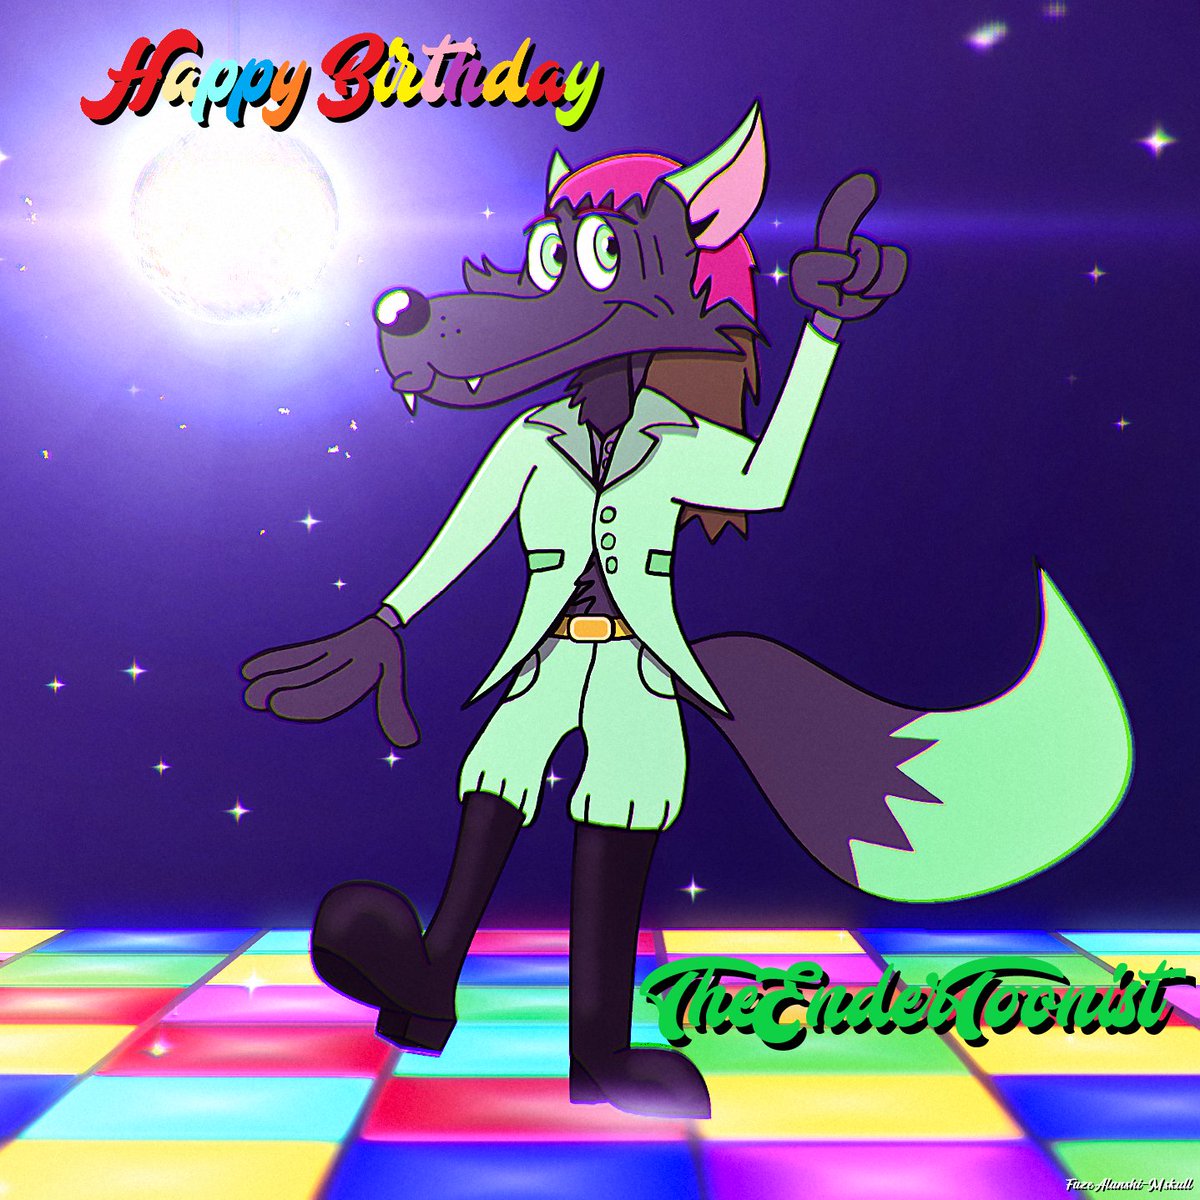 Happy Birthday Alexei - @TheEnderToonist 2023

#ocs #cartoonist #cartoonart #toon #foxes #foxfursona #fursona #alexeithefox #kaleofox #wolf #whitzerwolf #theendertoonist #birthday #happybirthday #smallartist #digitalart